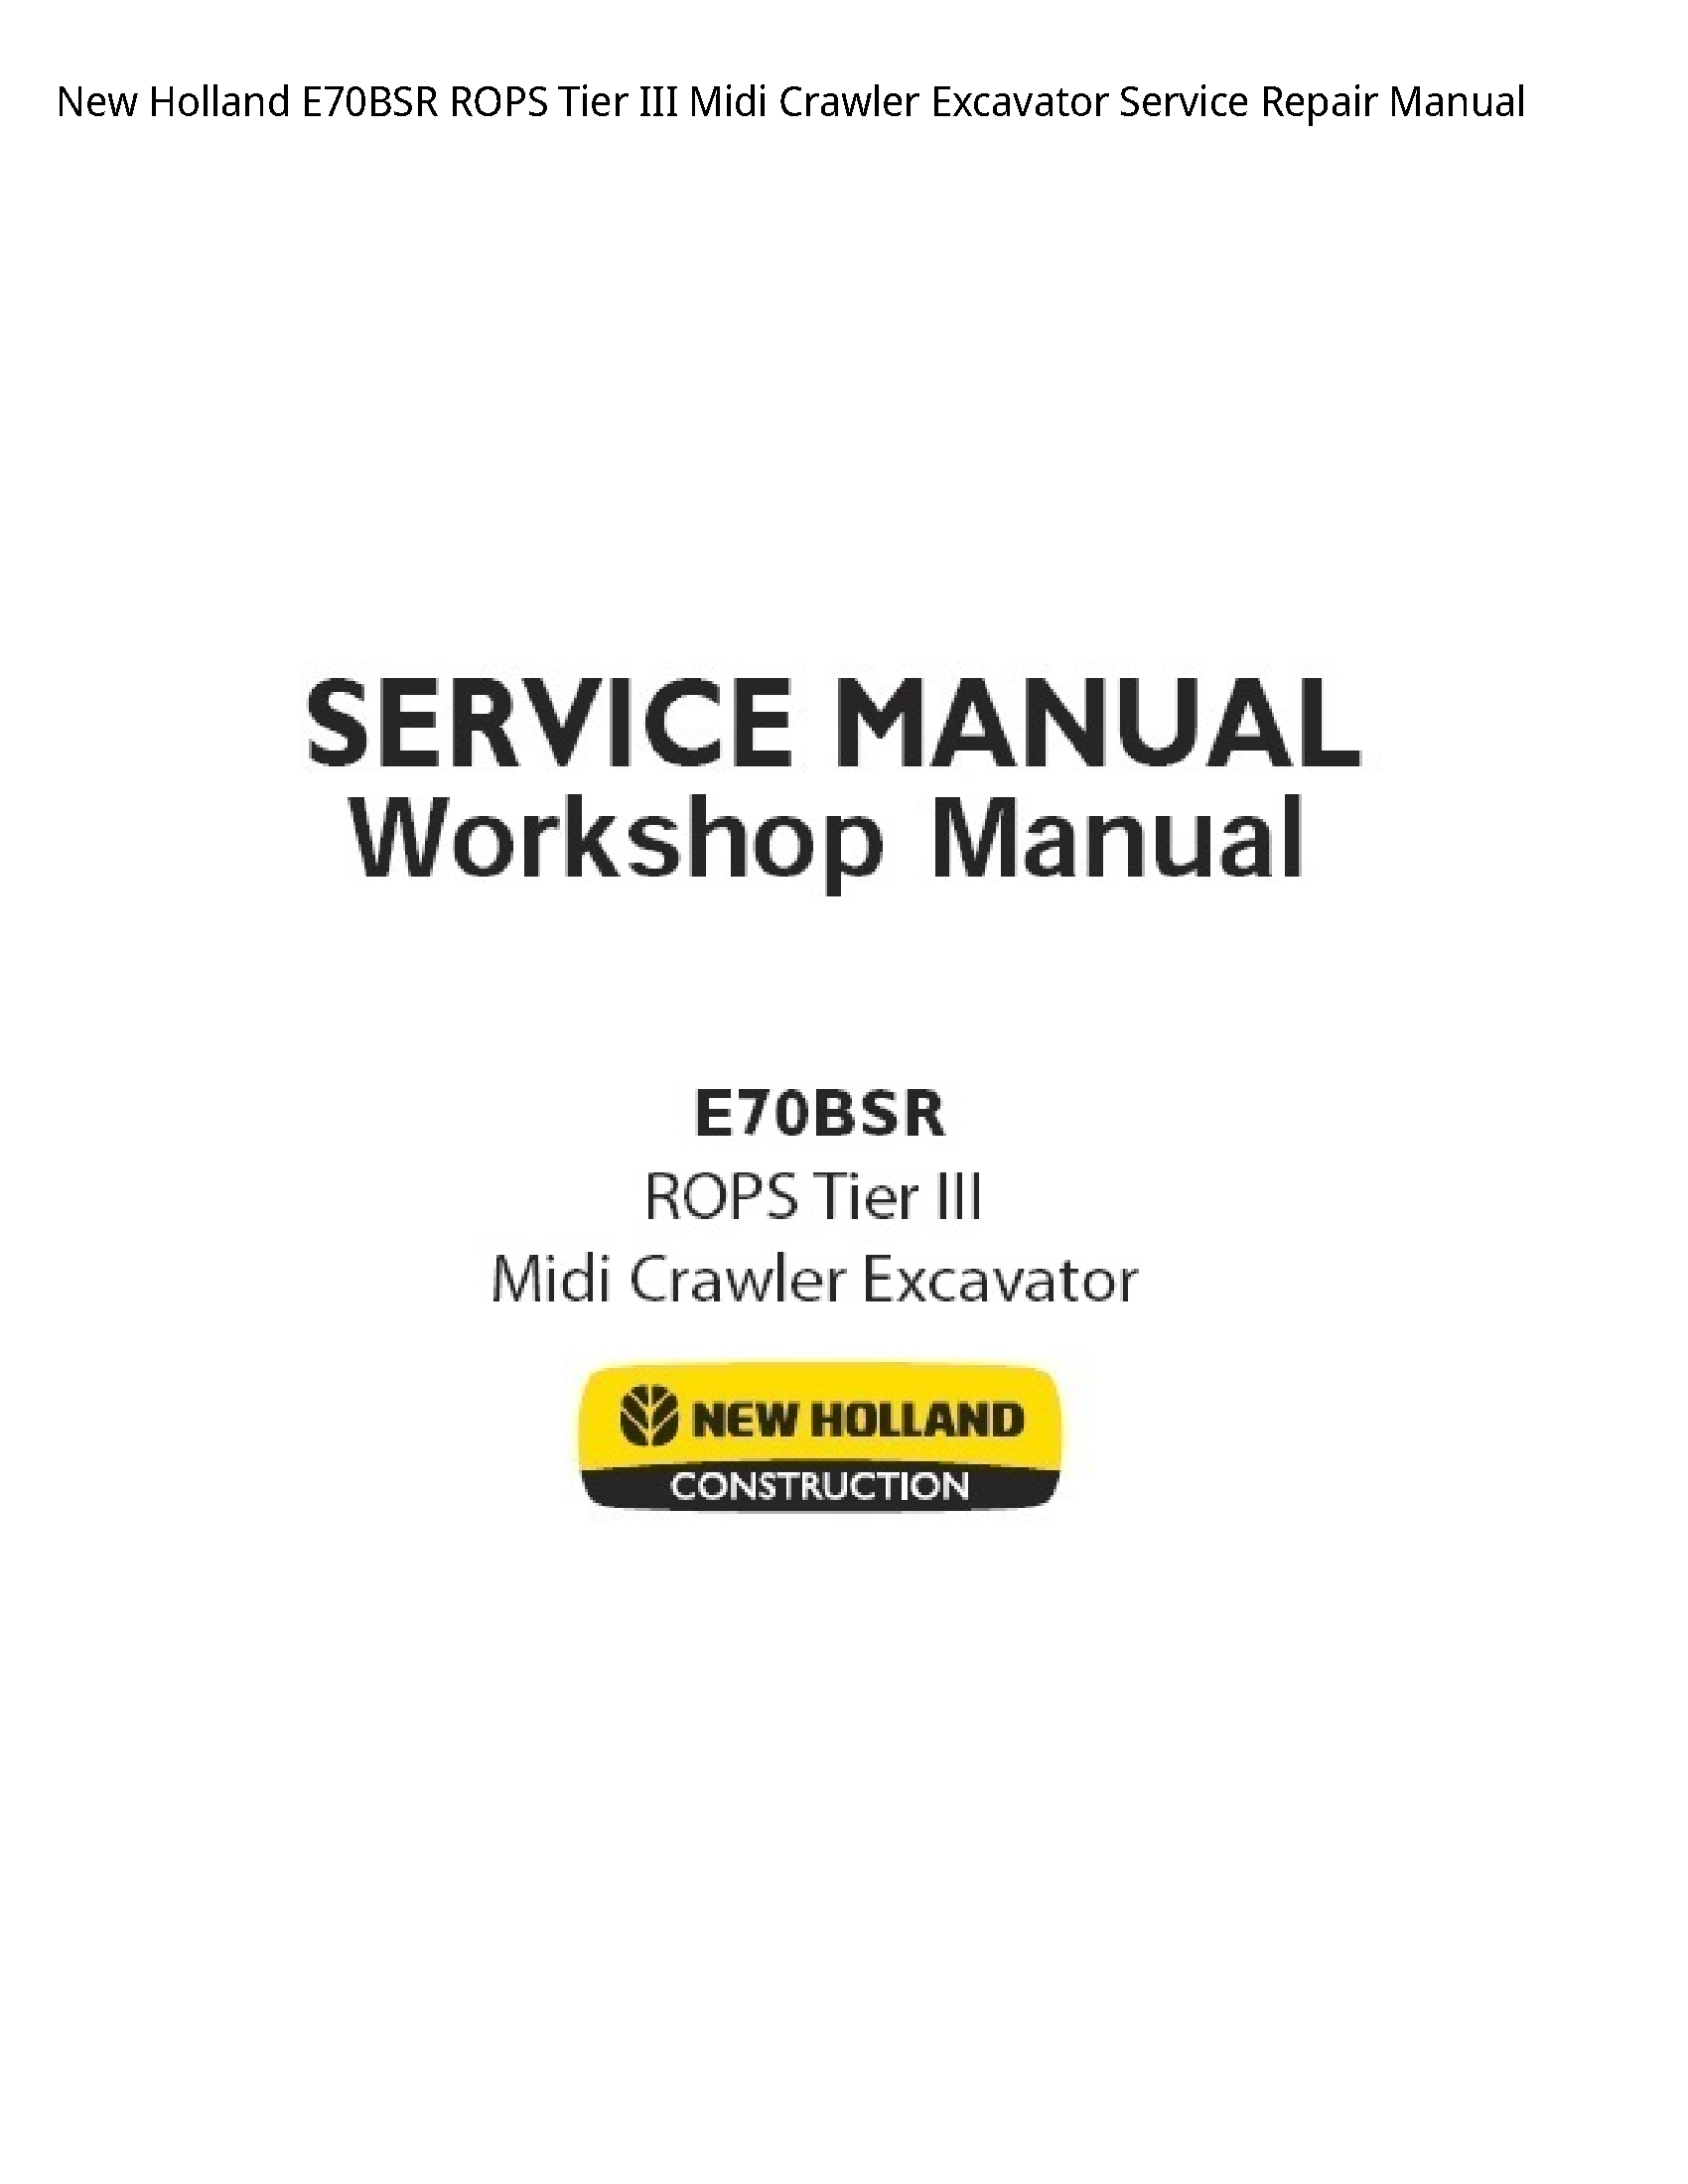 New Holland E70BSR ROPS Tier III Midi Crawler Excavator manual